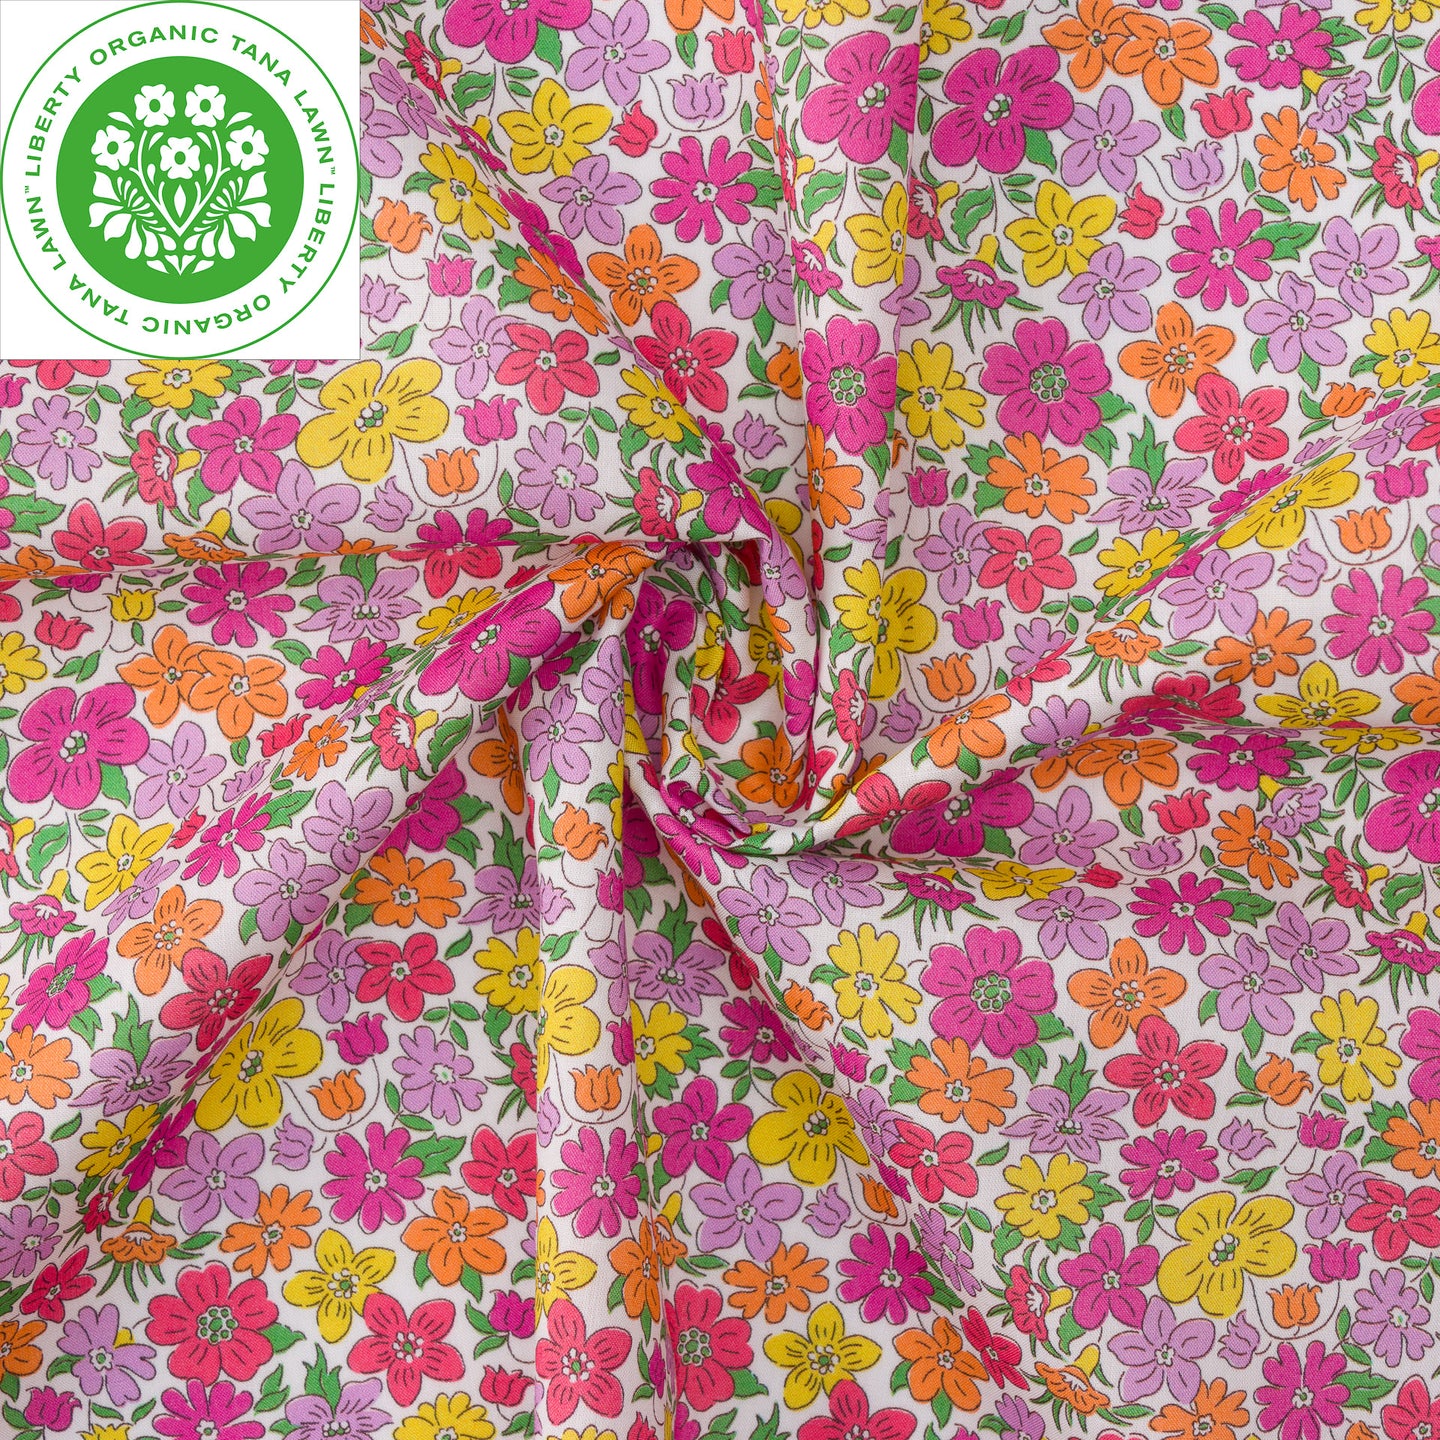 Tissu Liberty Fabrics Tana Lawn coton organic Betty Be 136 cm